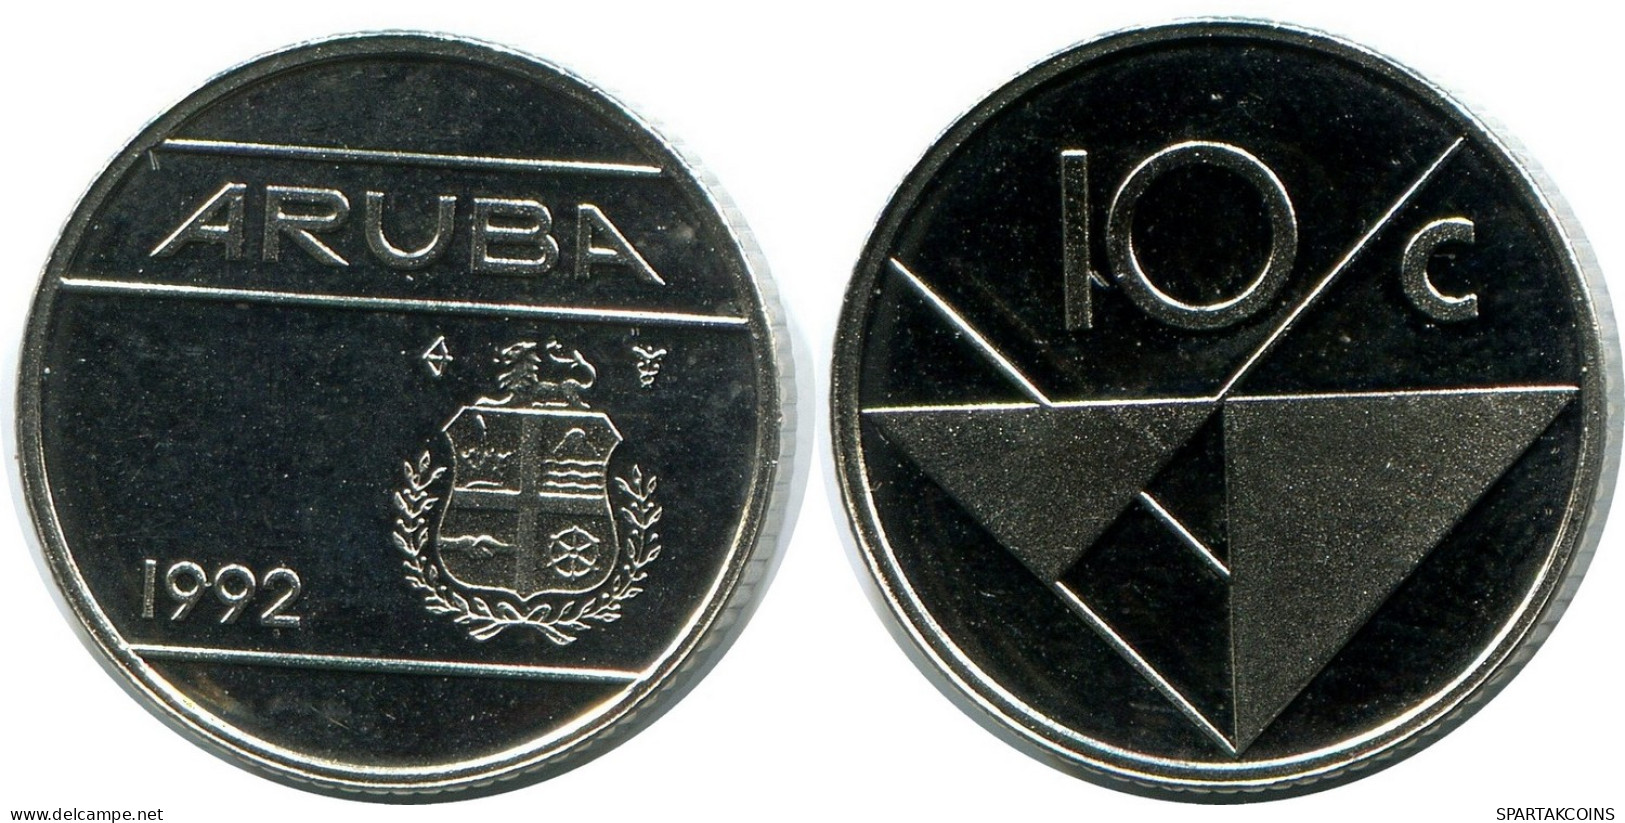 10 CENTS 1992 ARUBA Coin (From BU Mint Set) #AH078.U - Aruba